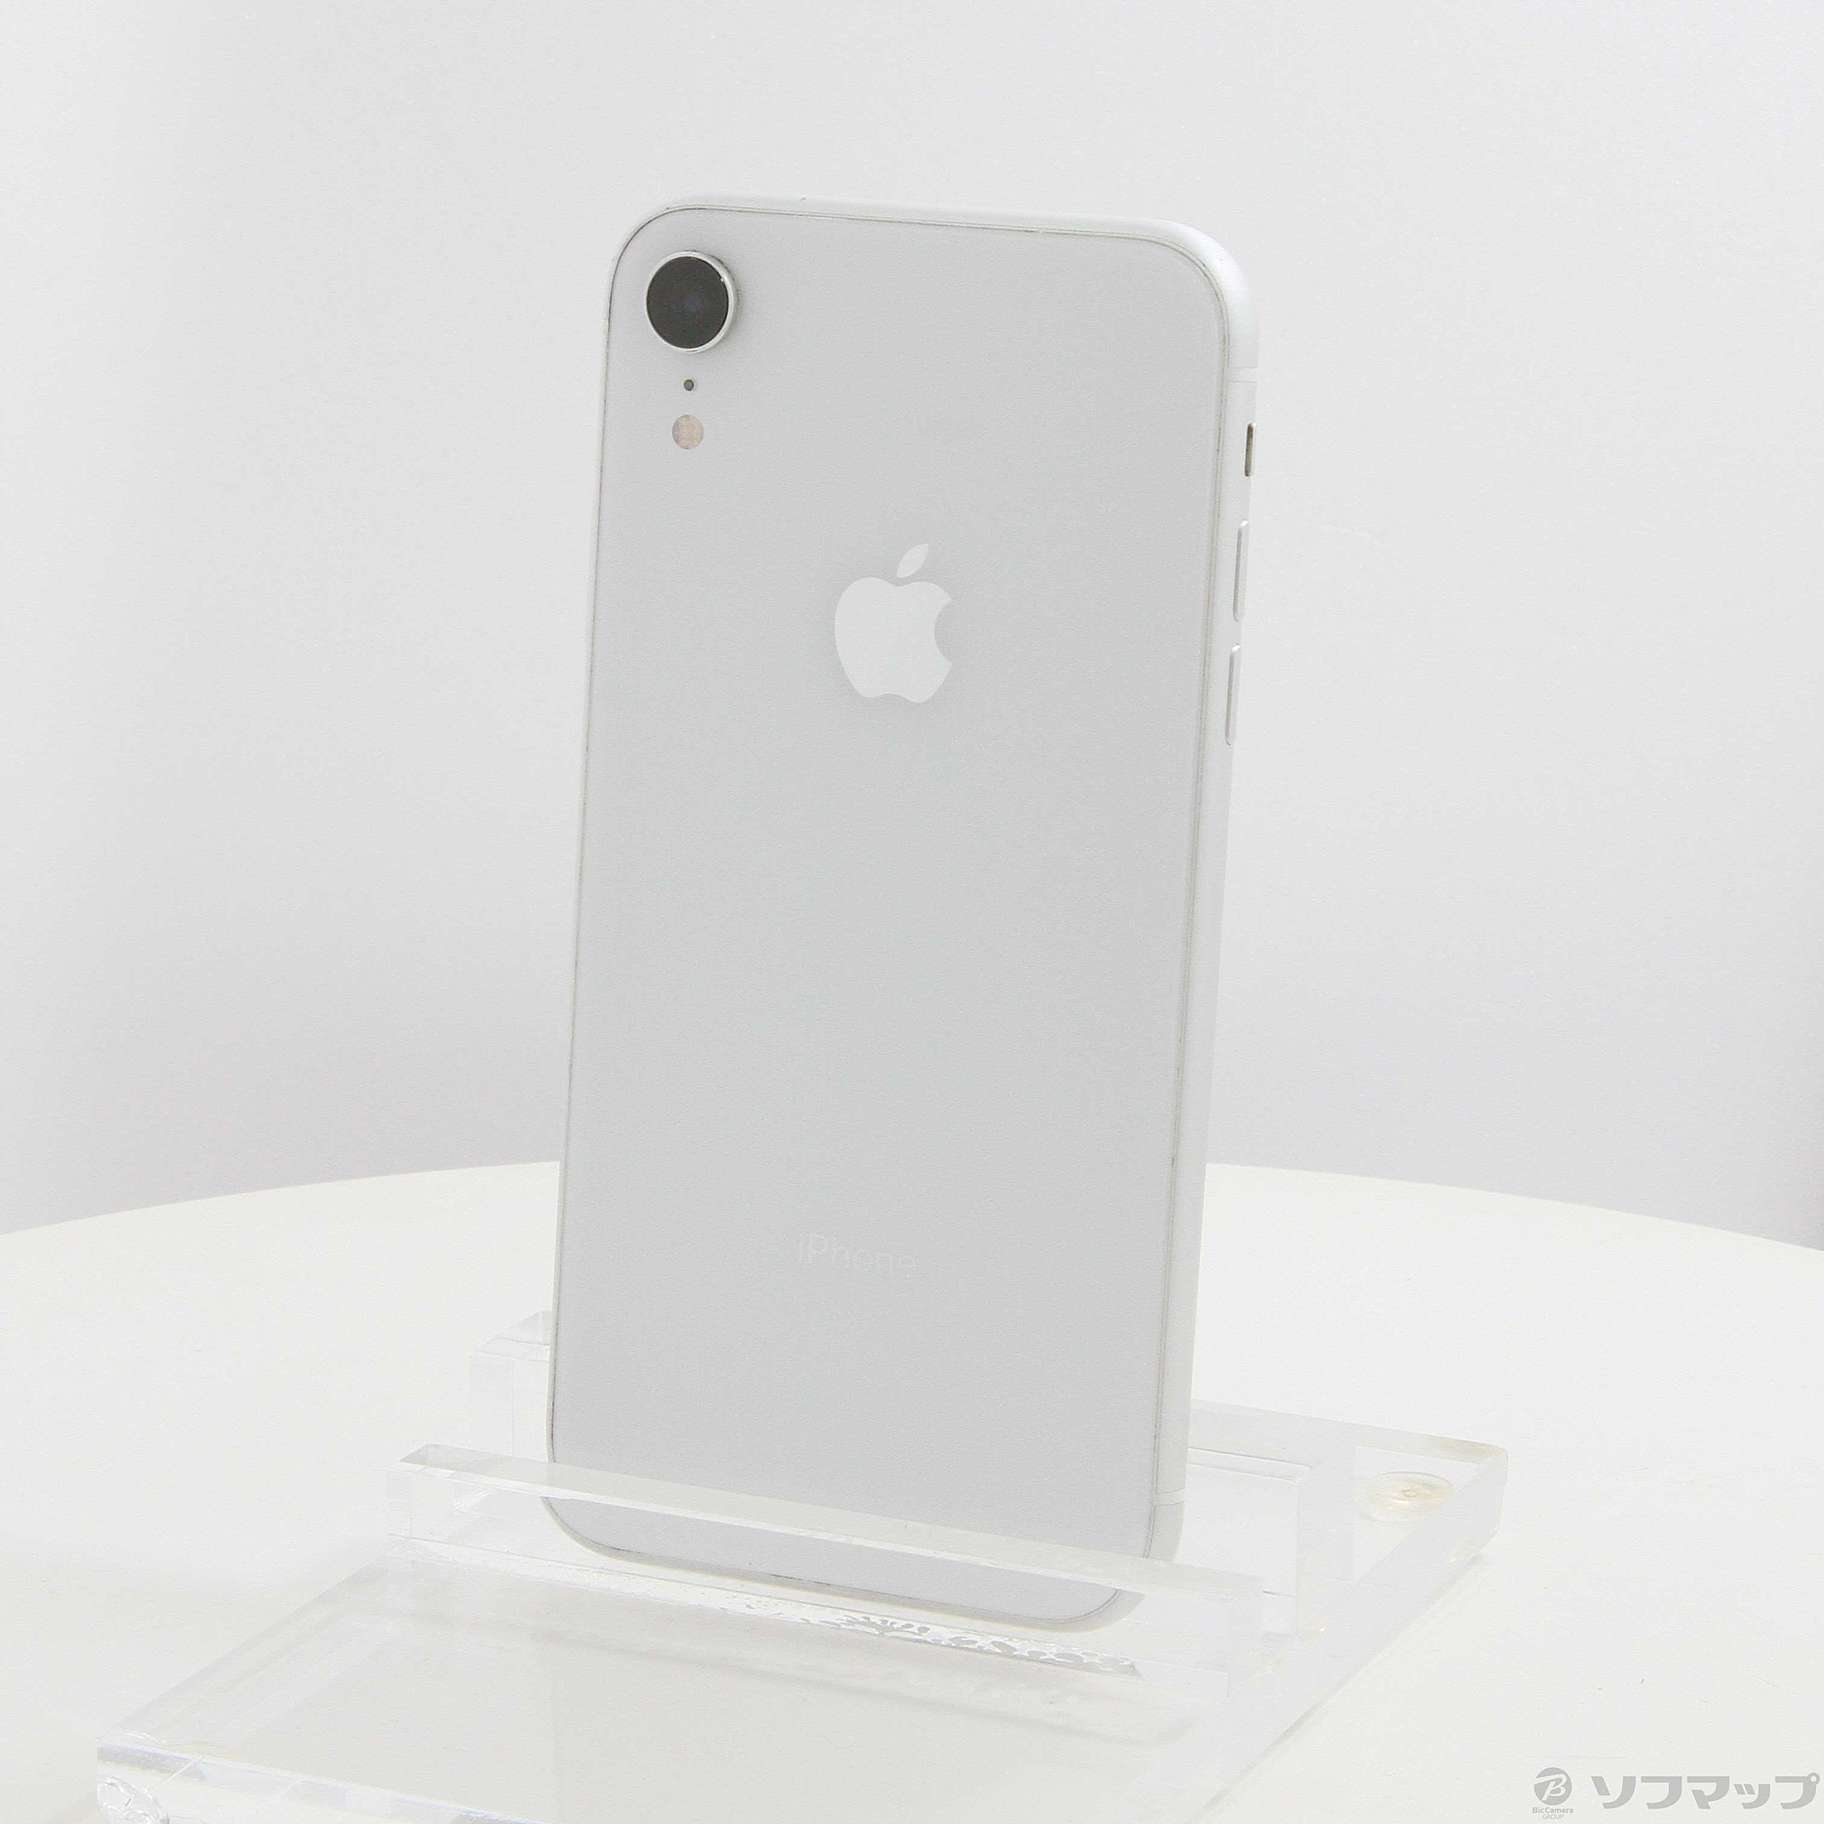 iPhoneXR 128G SIMフリー